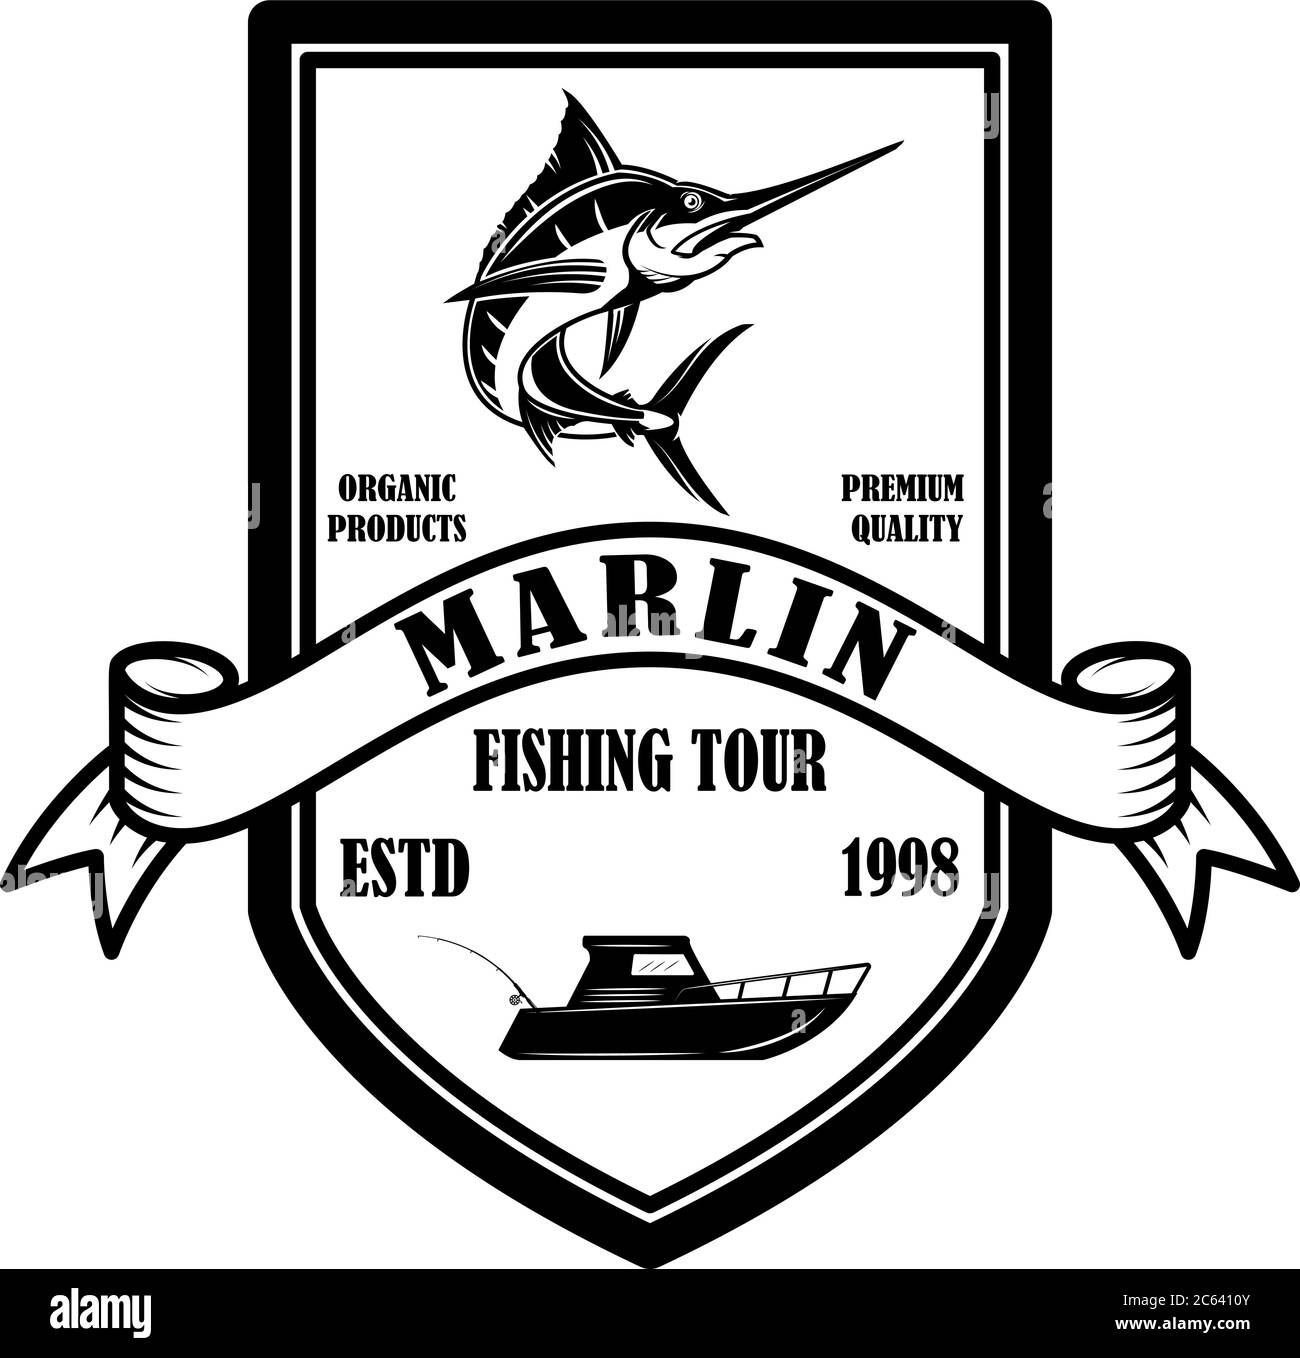 Marlin. Fishing trip. Emblem template with marlin. Design element for logo, label, sign, poster. Vector illustration Stock Vector